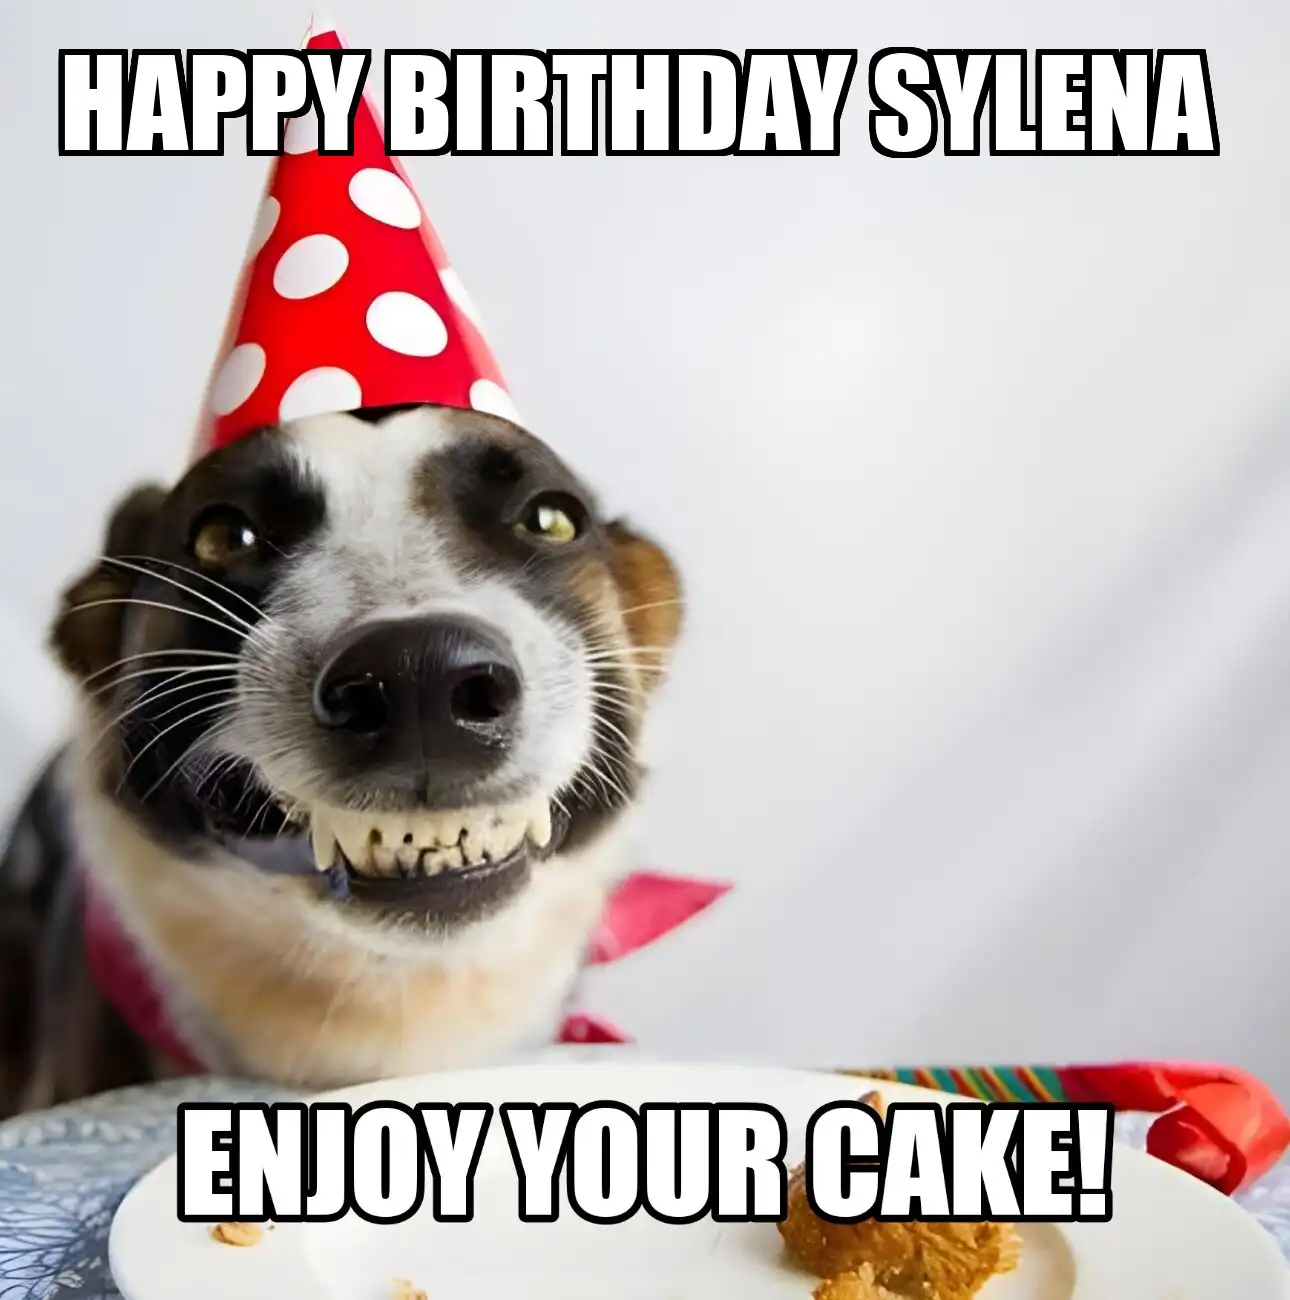 Happy Birthday Sylena Enjoy Your Cake Dog Meme